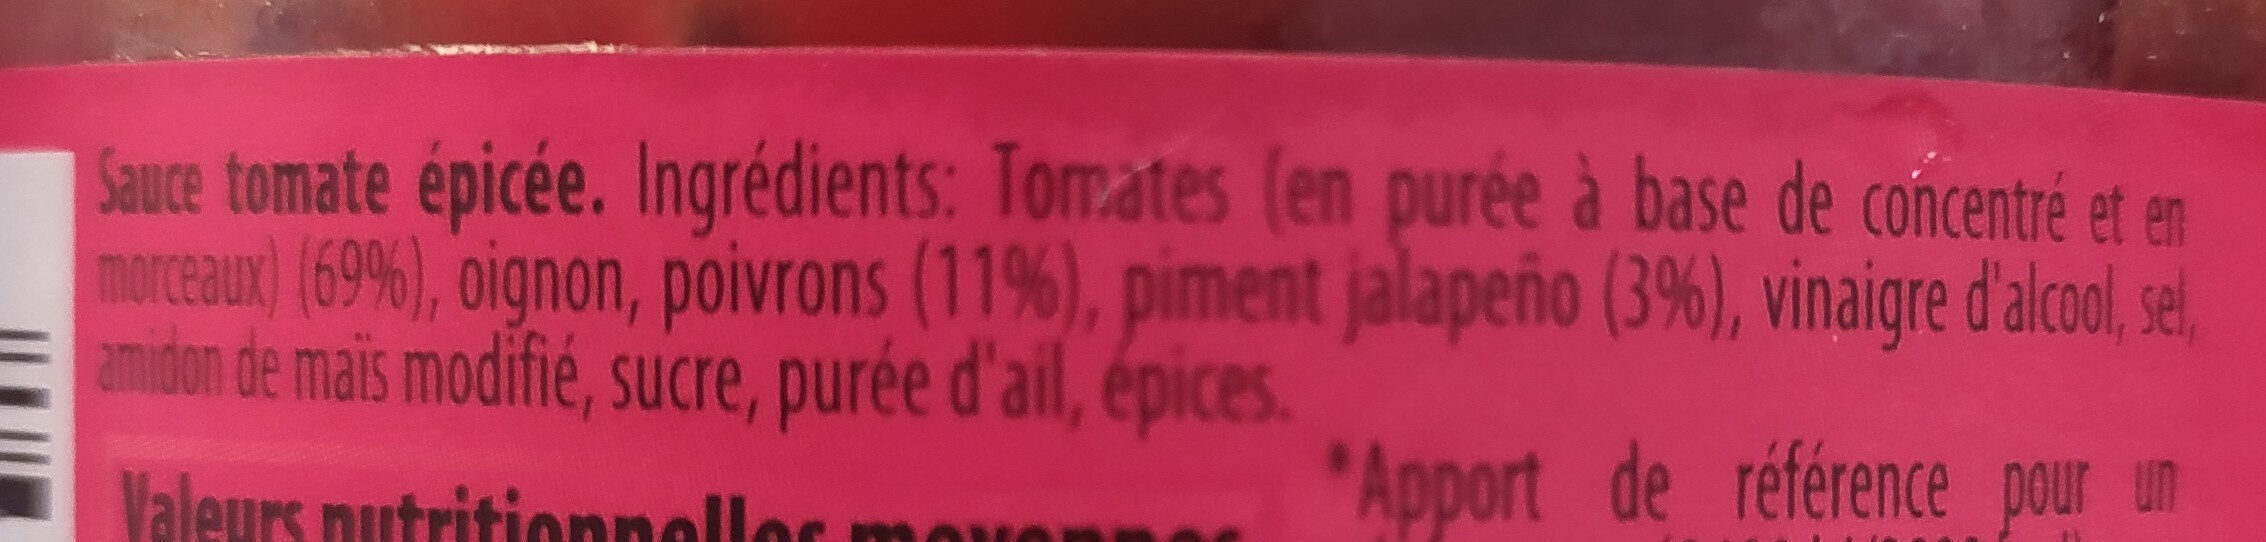 Doritos Salsa épicée - Ingredients - fr